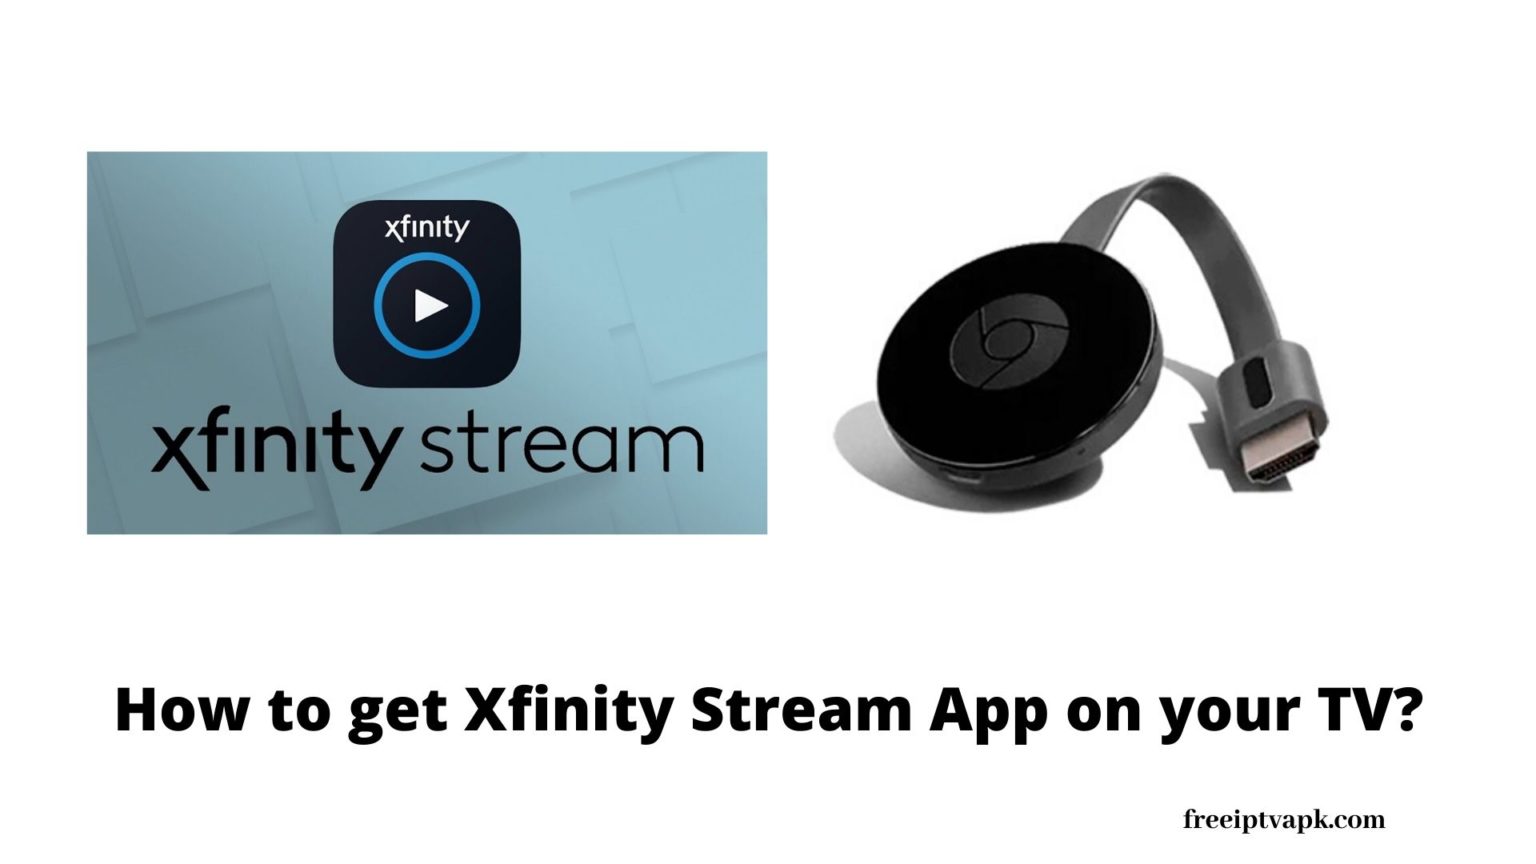 xfinity stream chromecast 2019 Archives